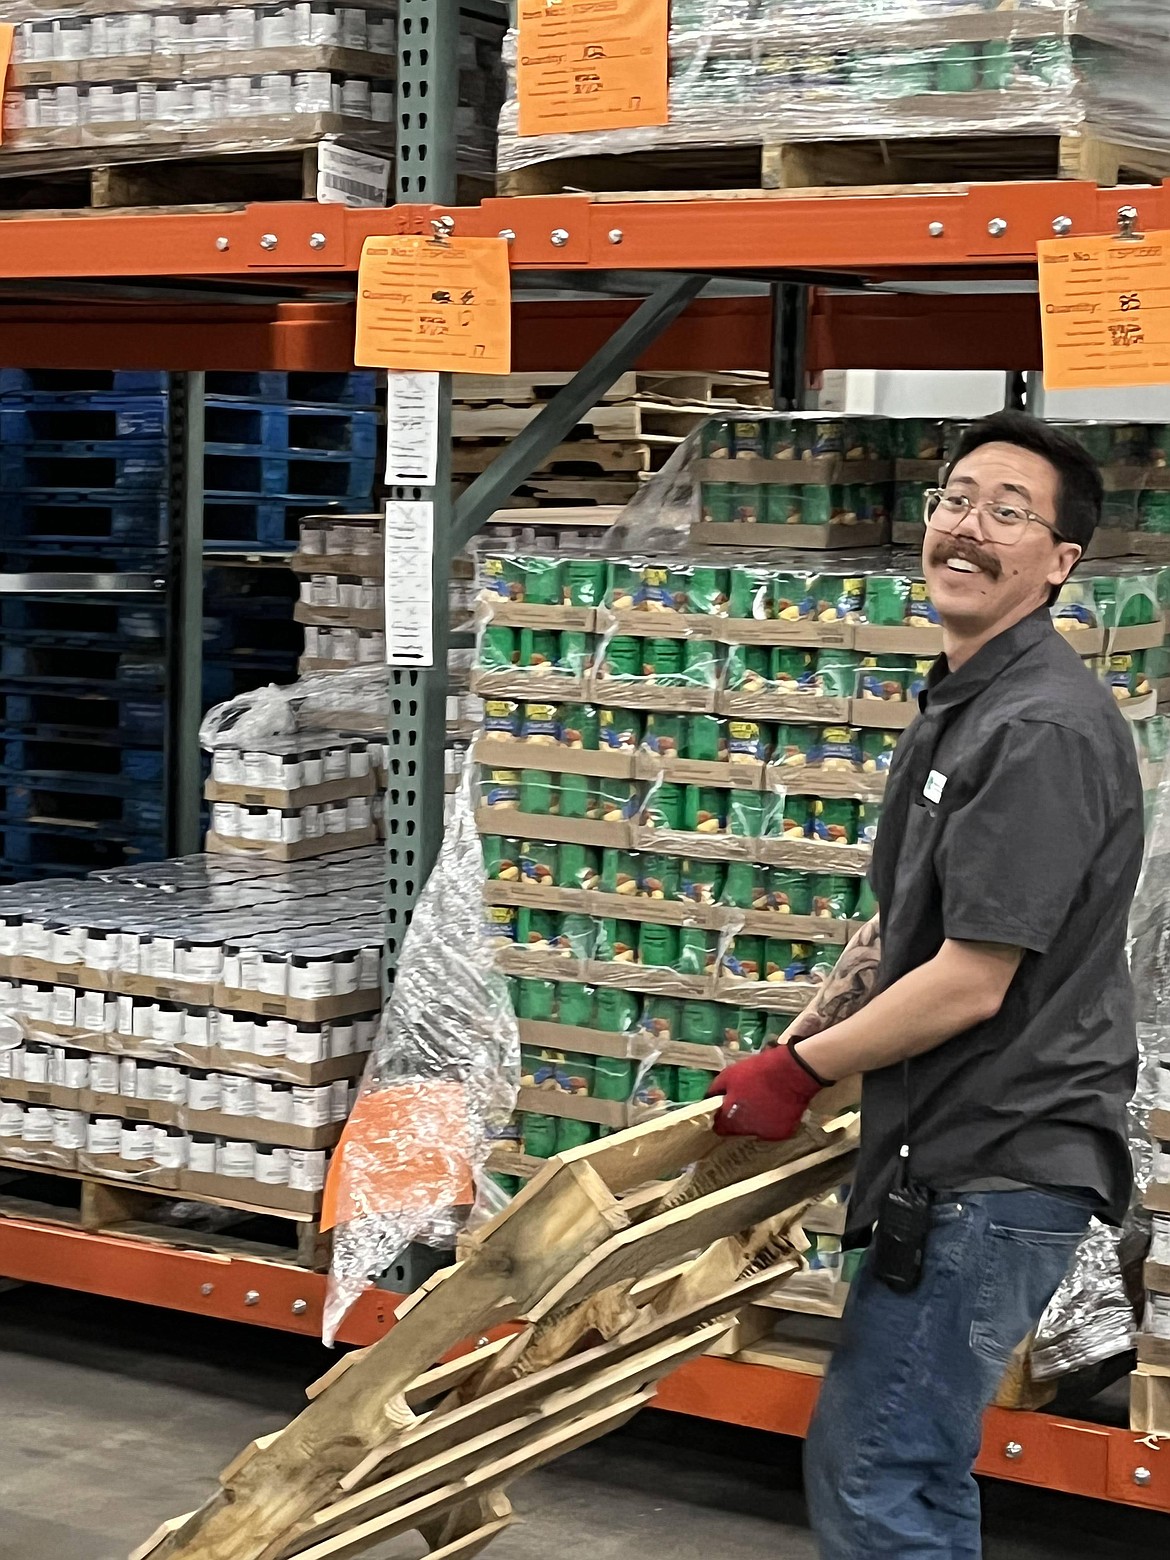 Supply chain associate Brandon Vasquez stocks the shelves of the emergency food assistance program at Second Harvest in Spokane on Friday morning.